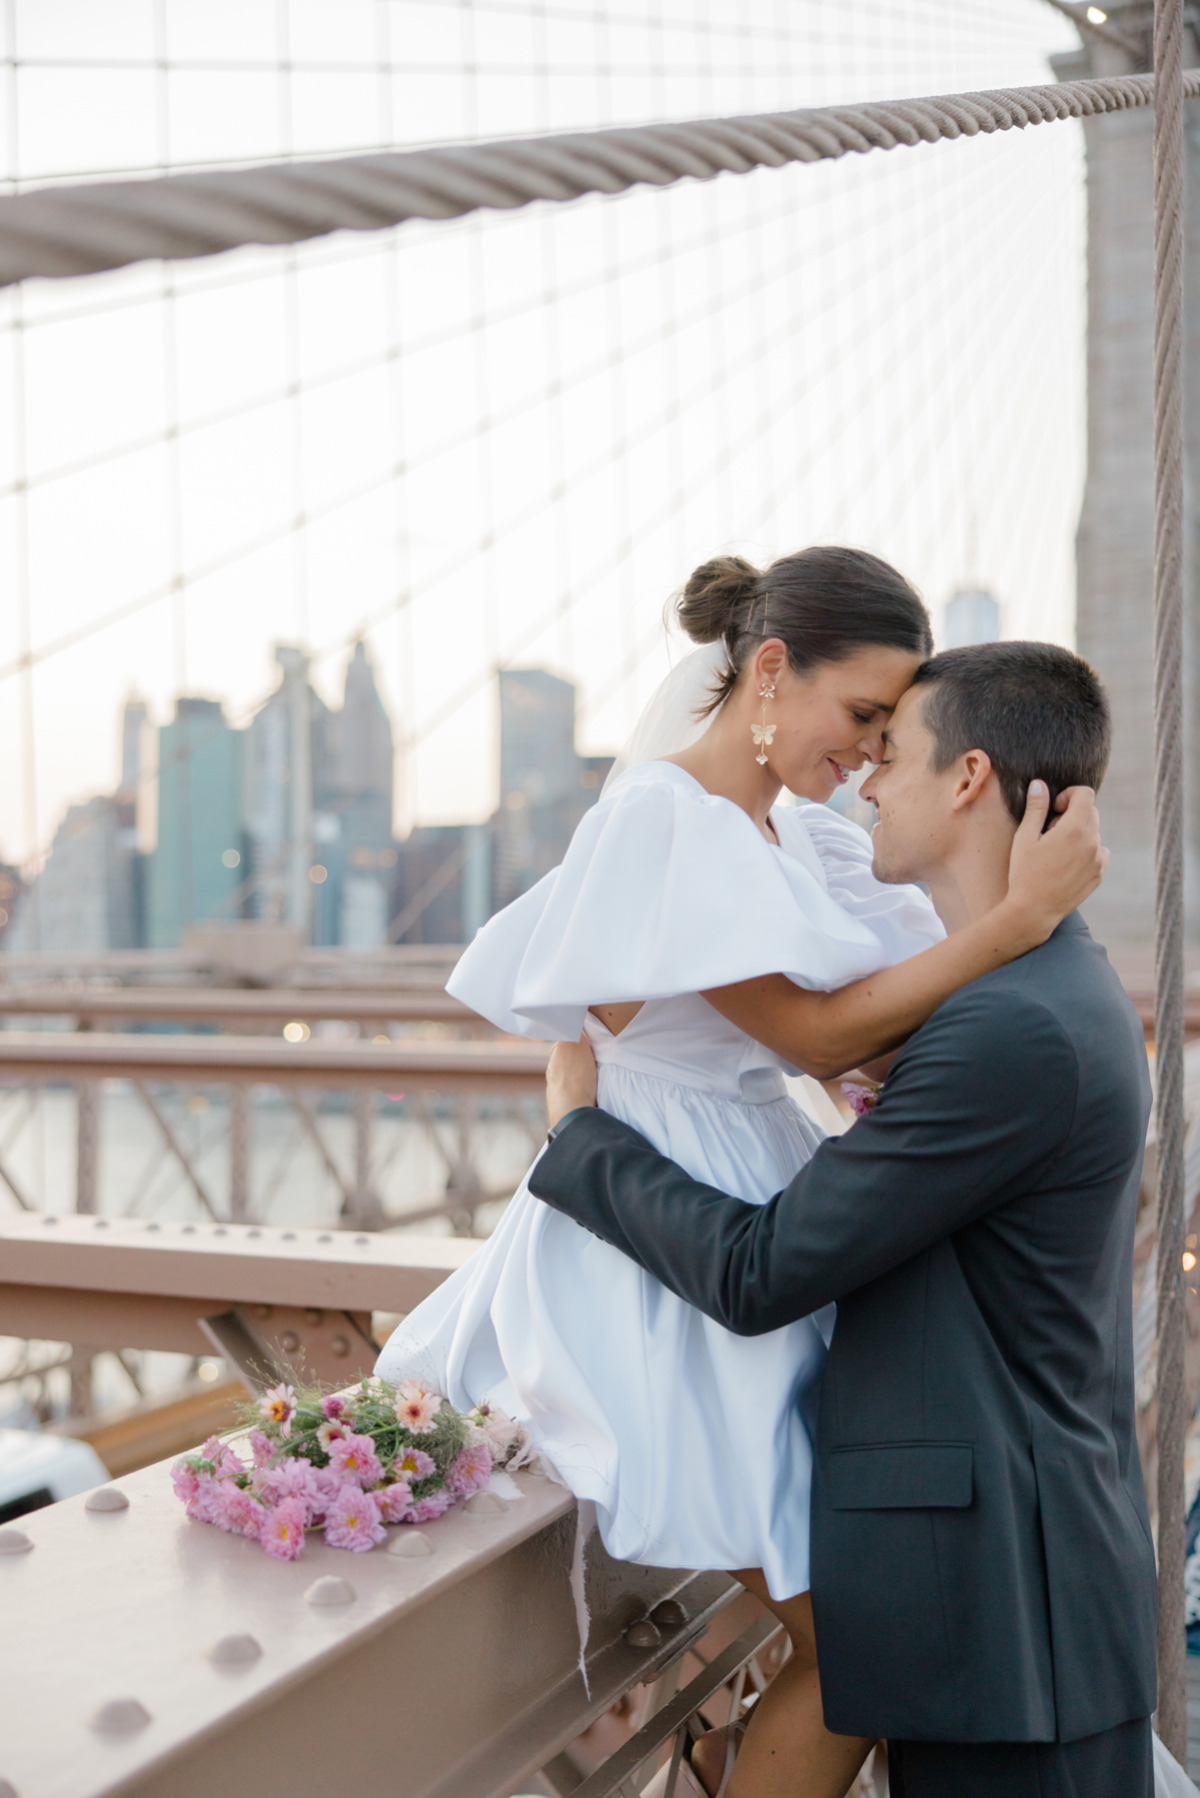 Romantic NYC wedding photo locations